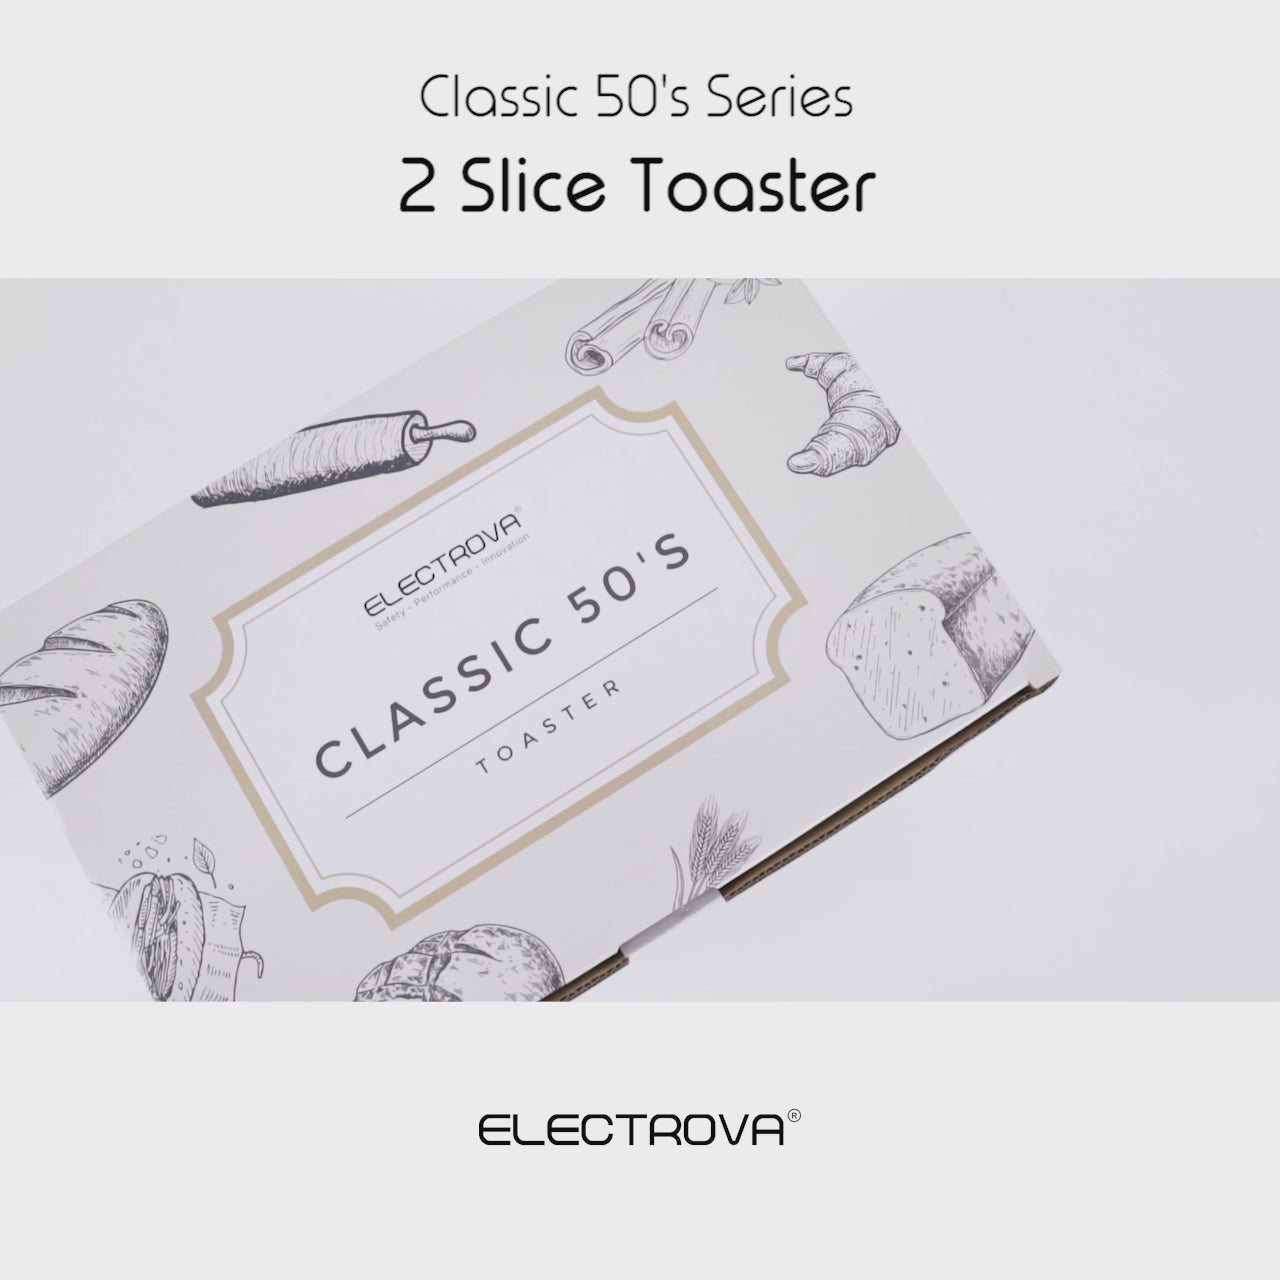 Electrova Classic 50's 2 Slice Toaster